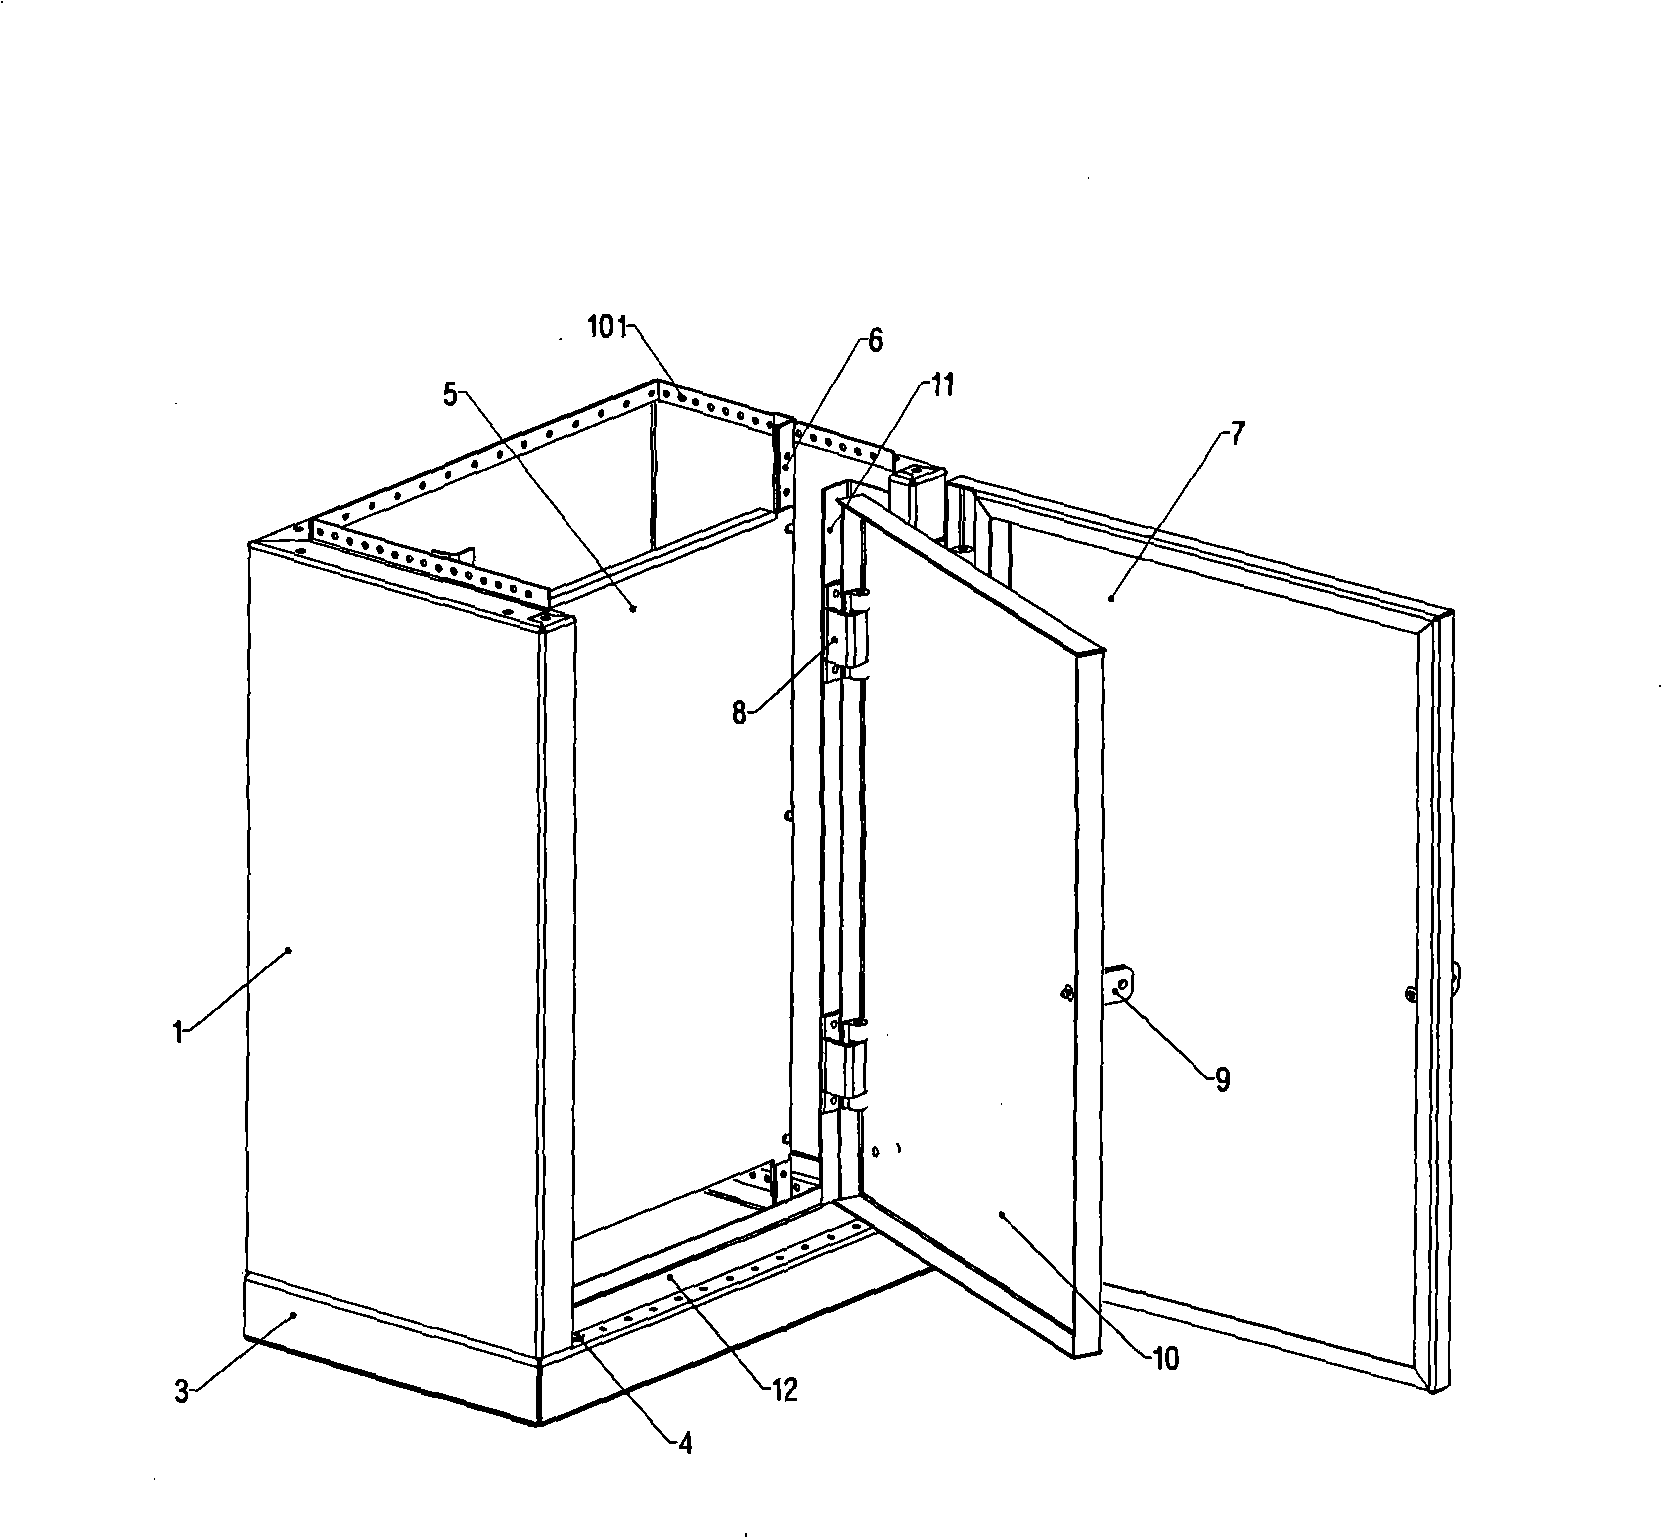 Assembled distribution box